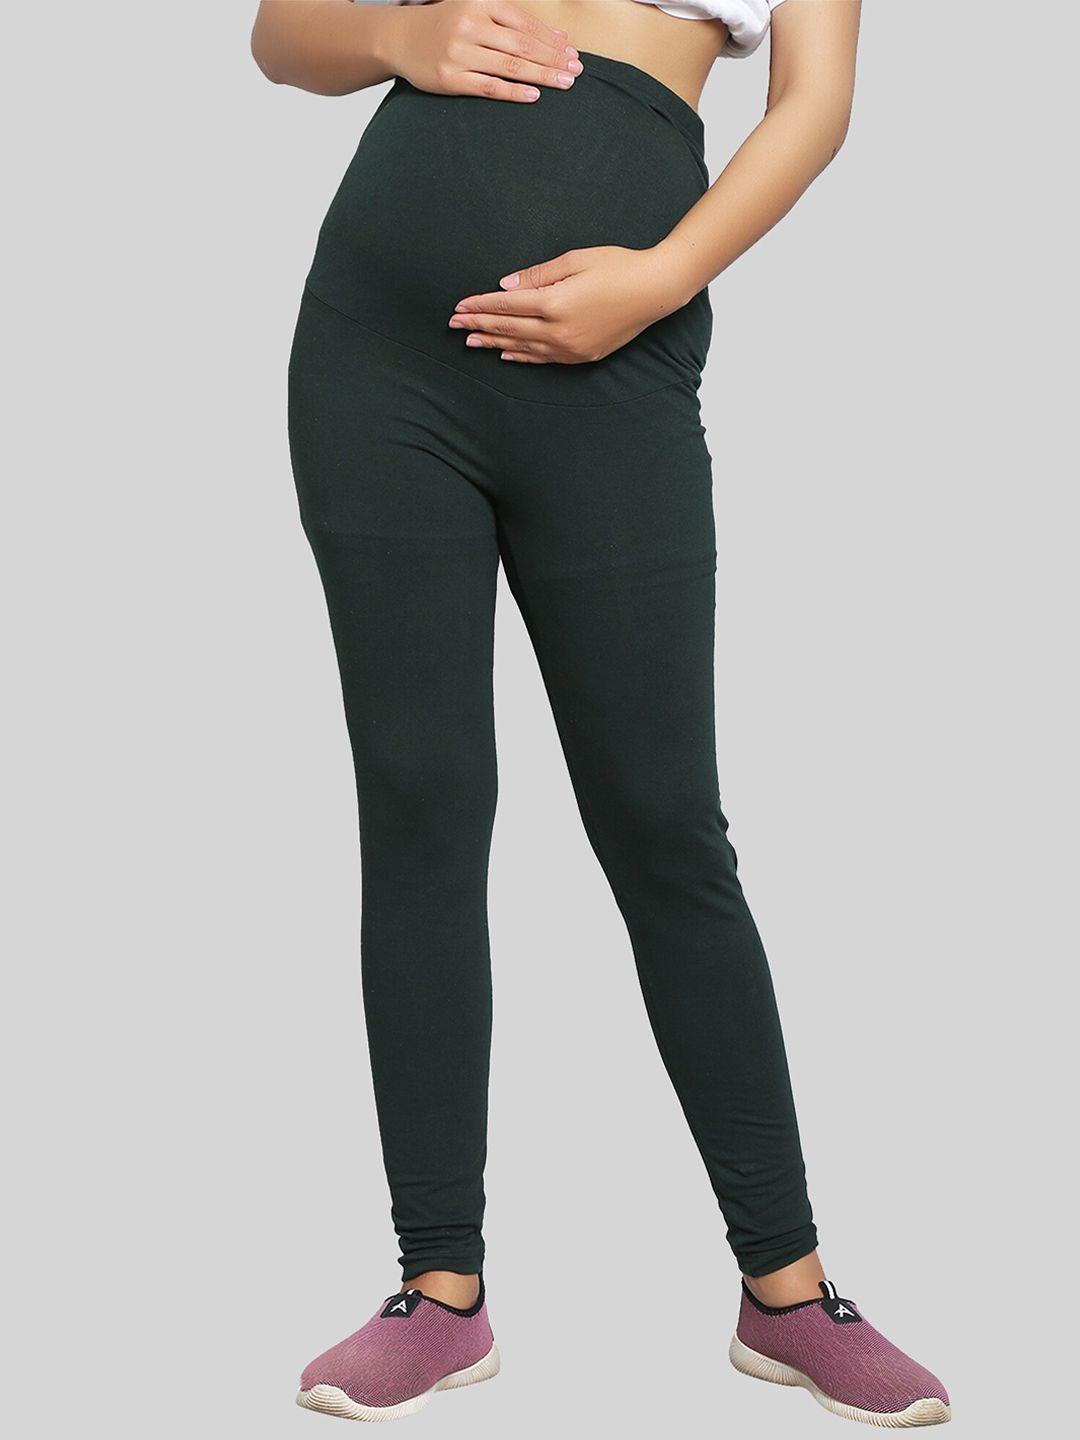 sillyboom breathable churidar length maternity leggings